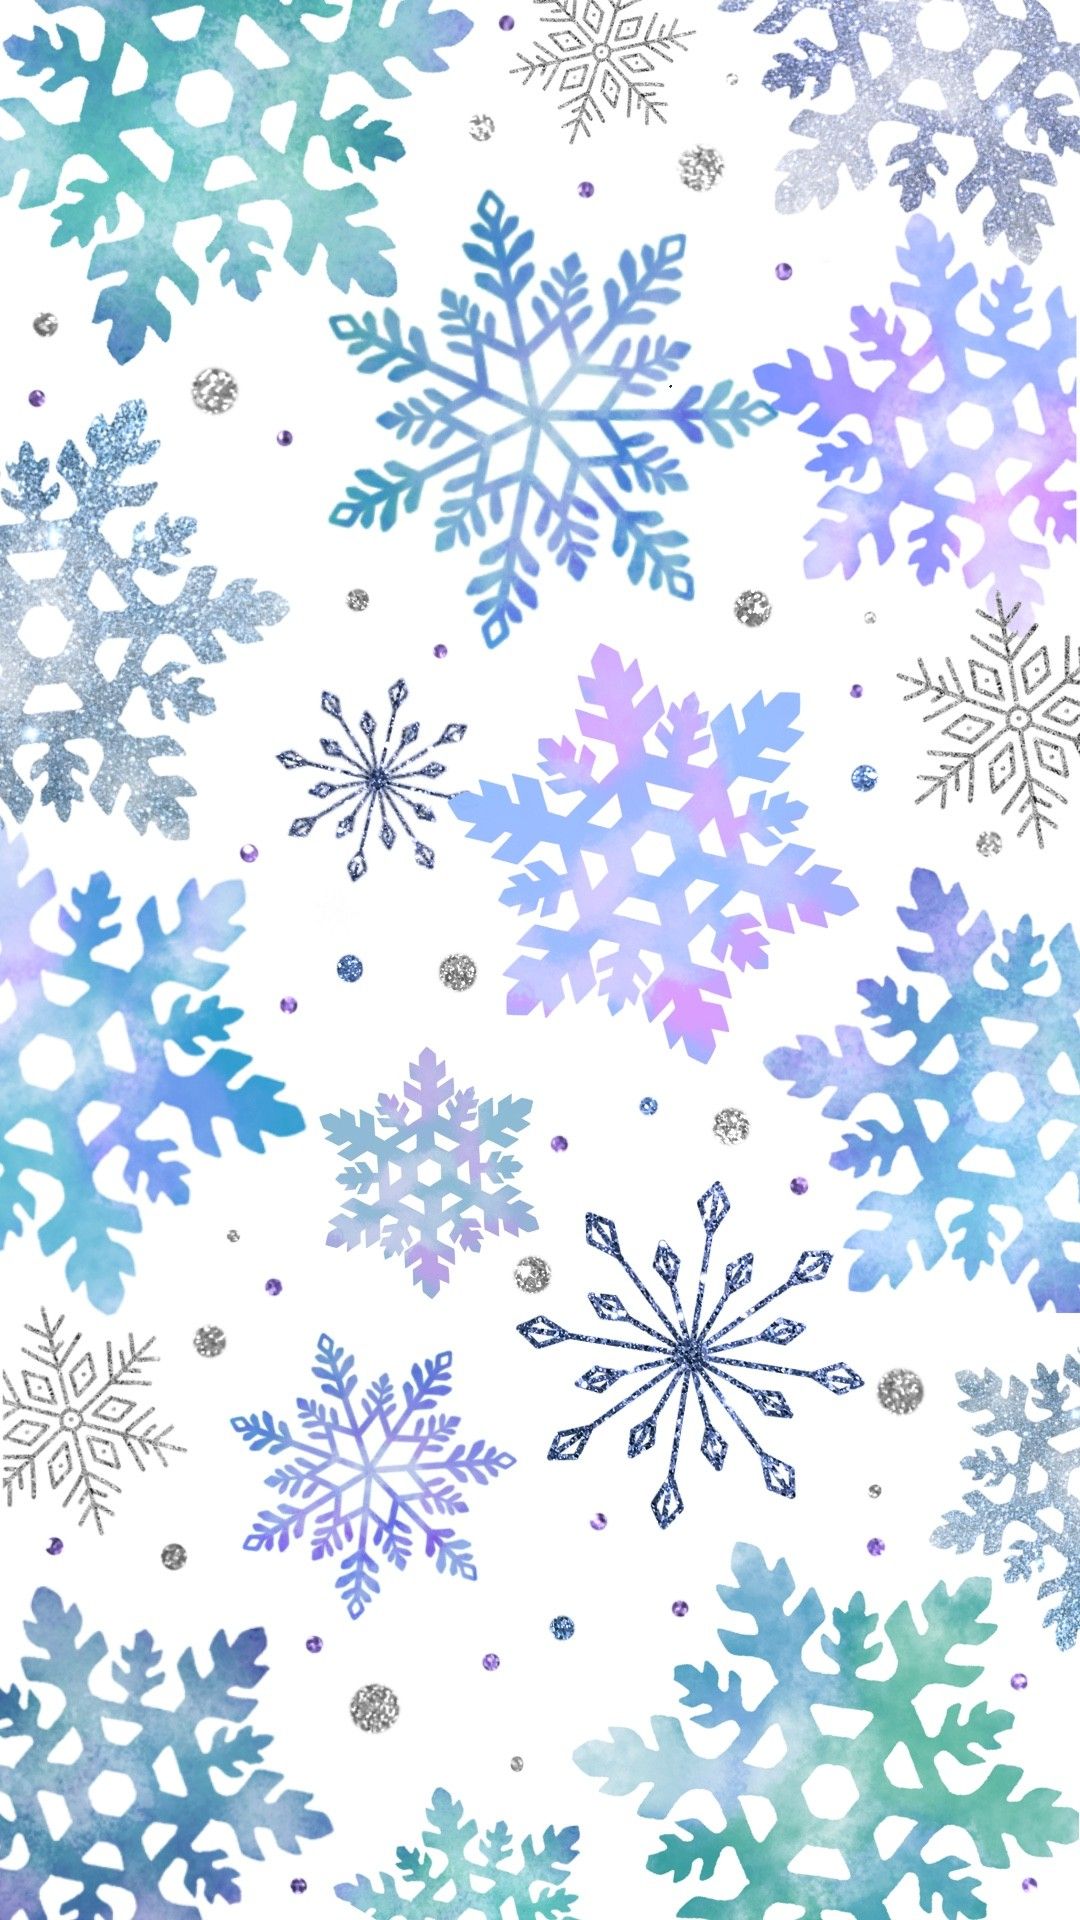 Iphone wallpaper blue snowflake - Snowflake